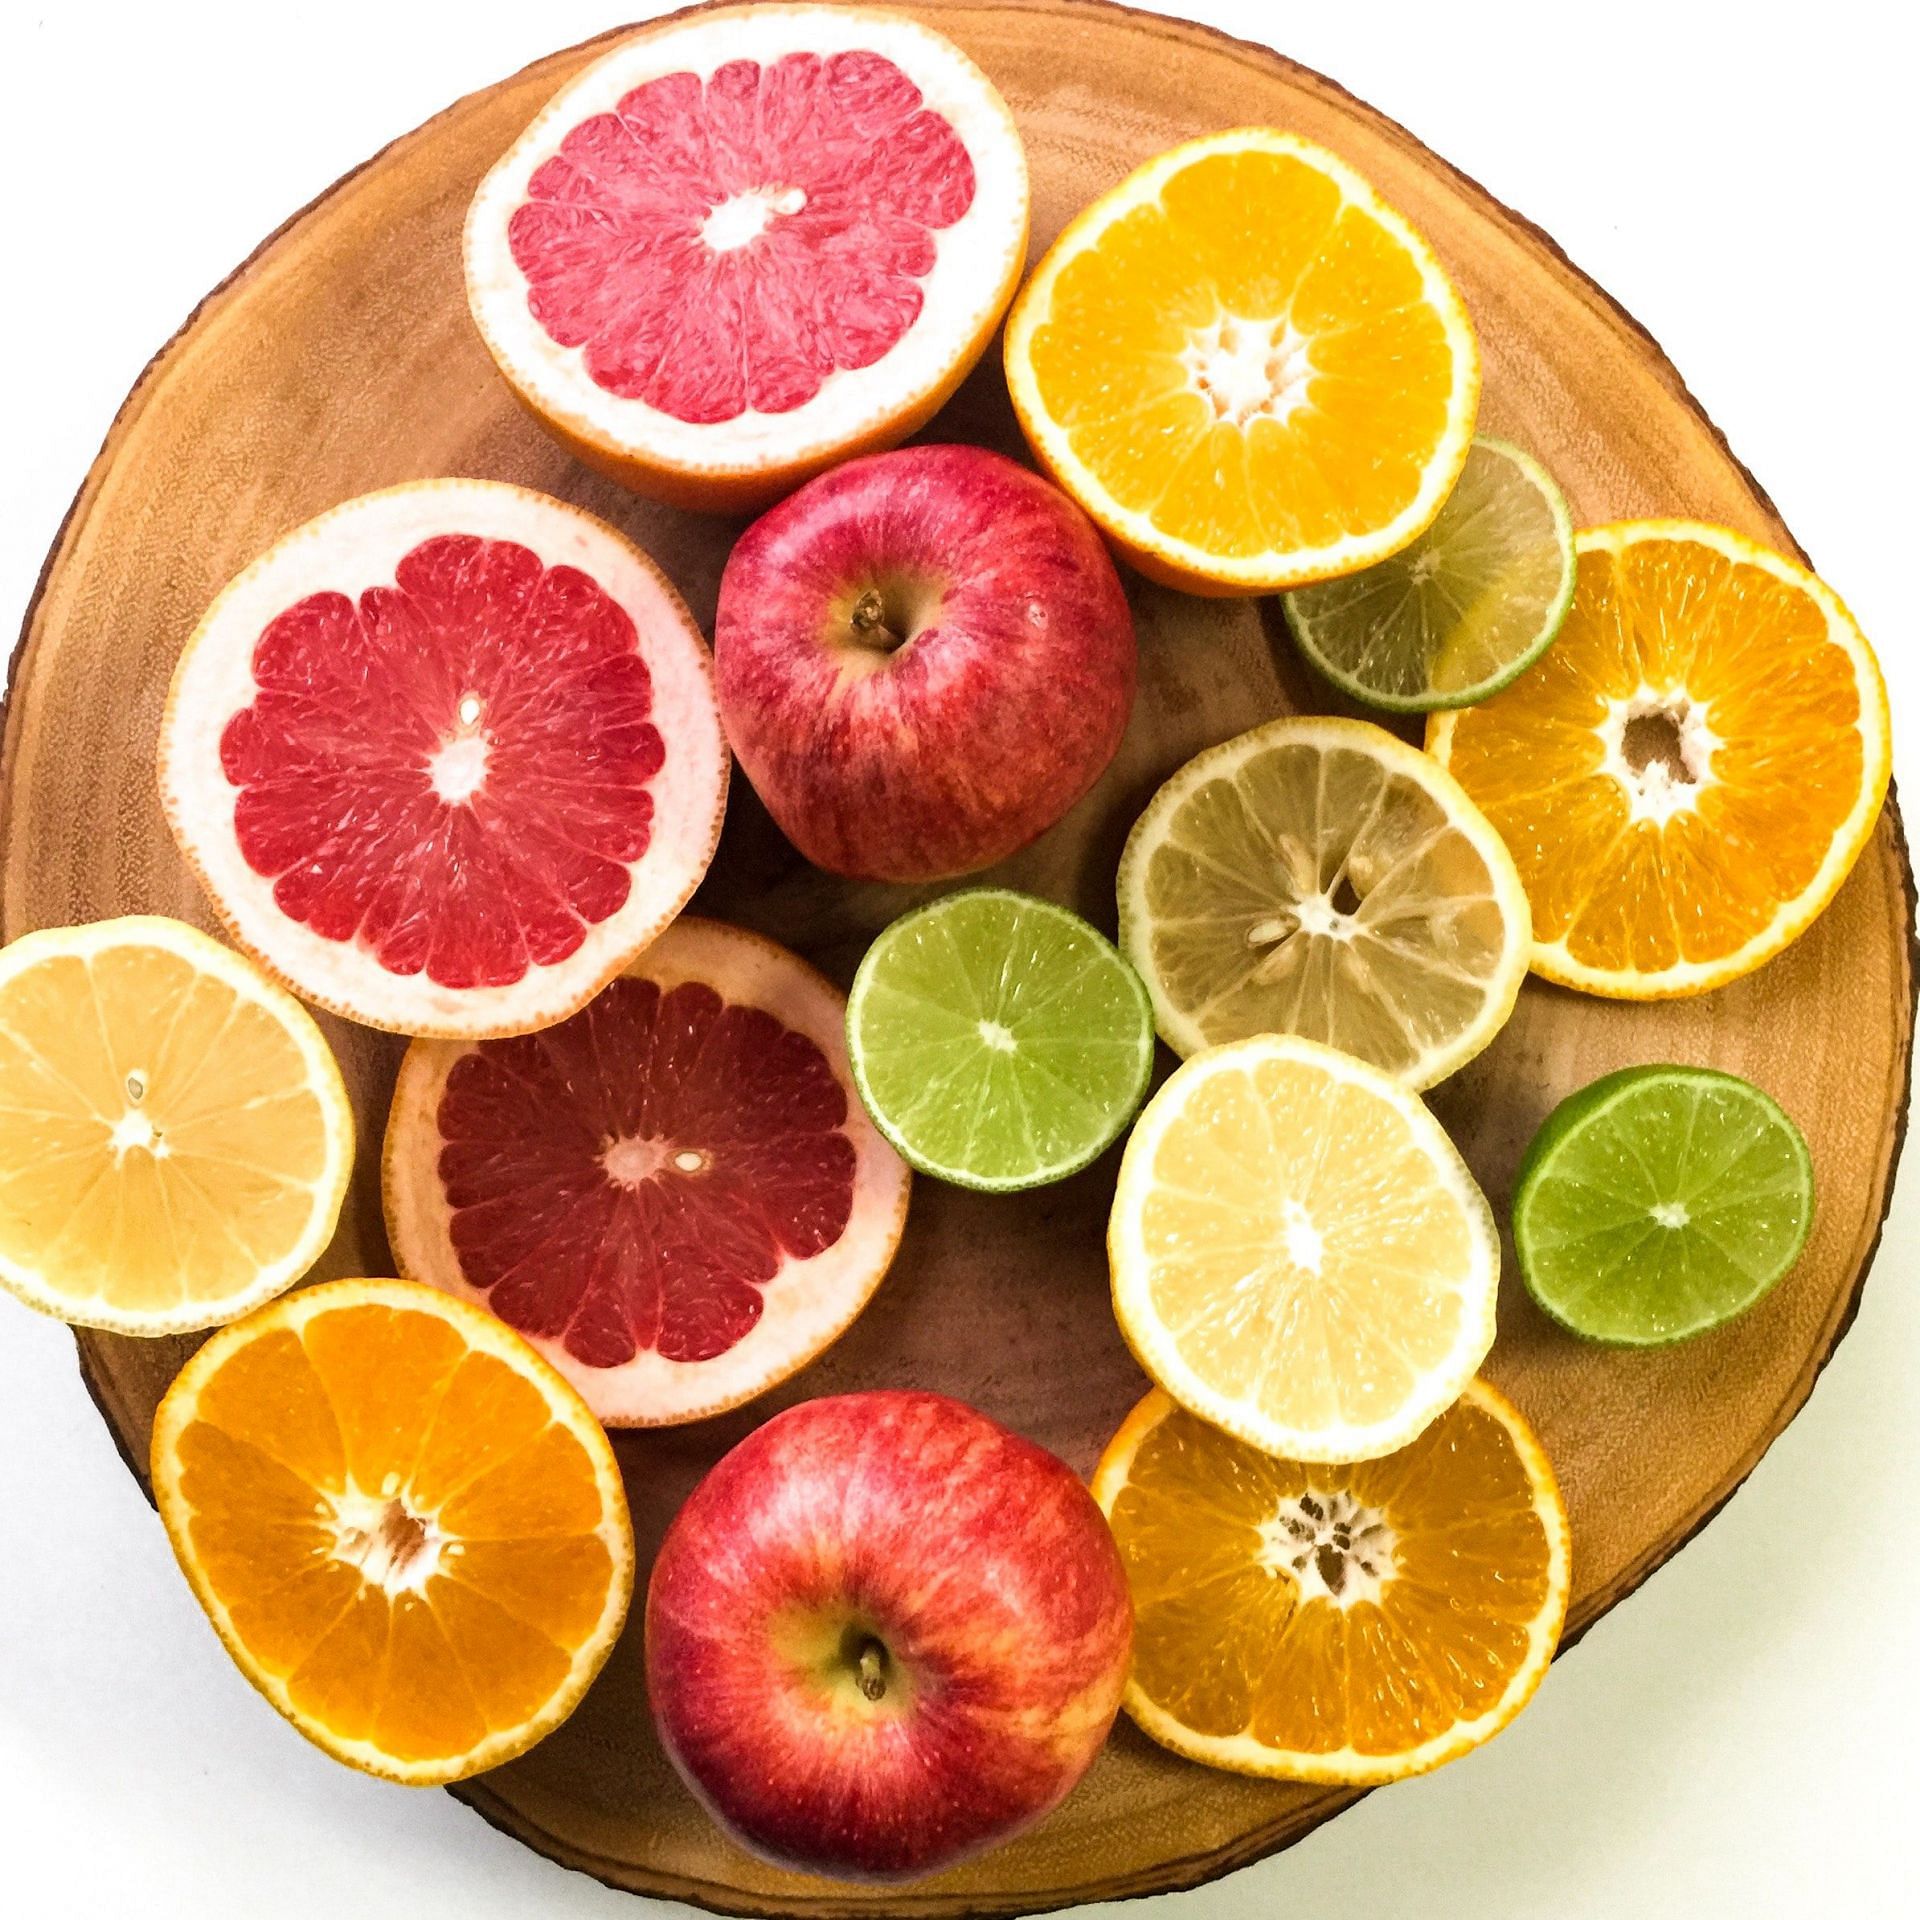 Citrus fruits are a great source of vitamin C. (Image via Pexels)